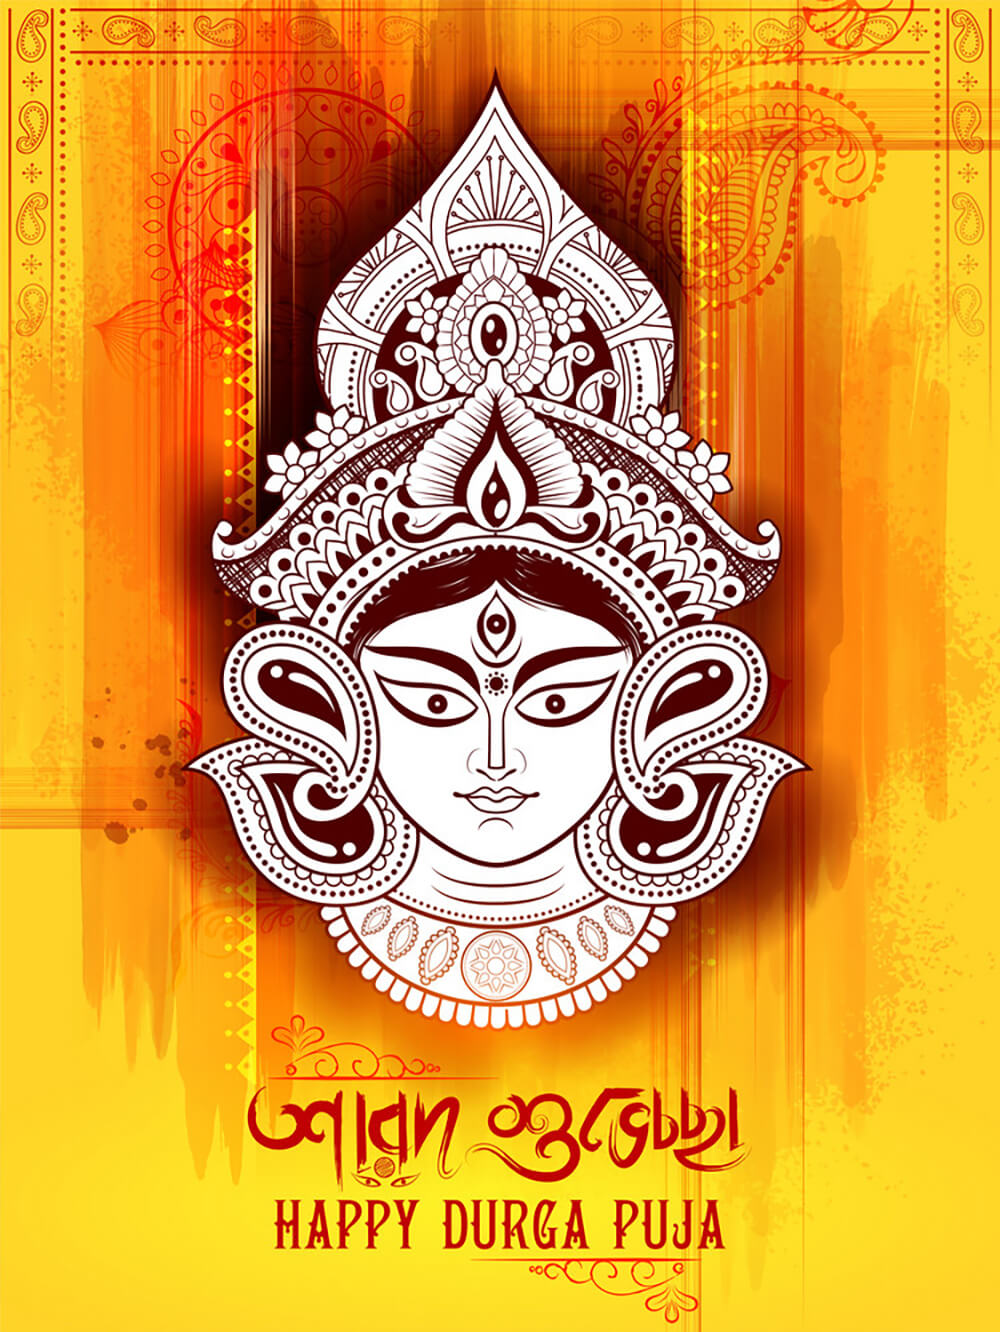 Download Happy Durga Puja Images